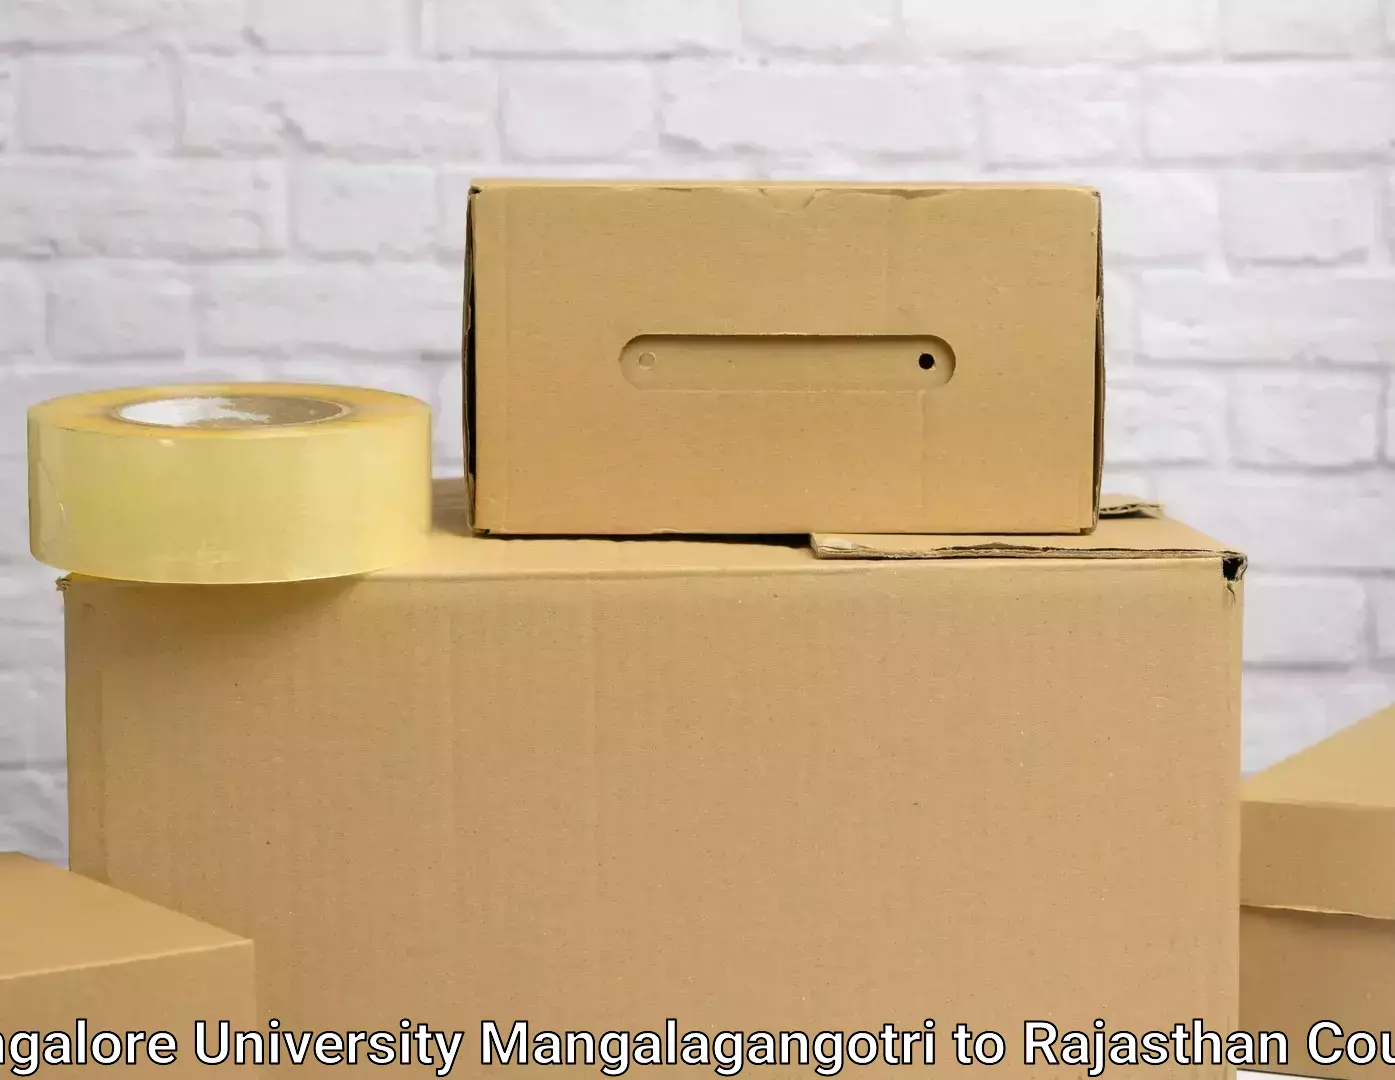 Furniture delivery service in Mangalore University Mangalagangotri to Dungarpur